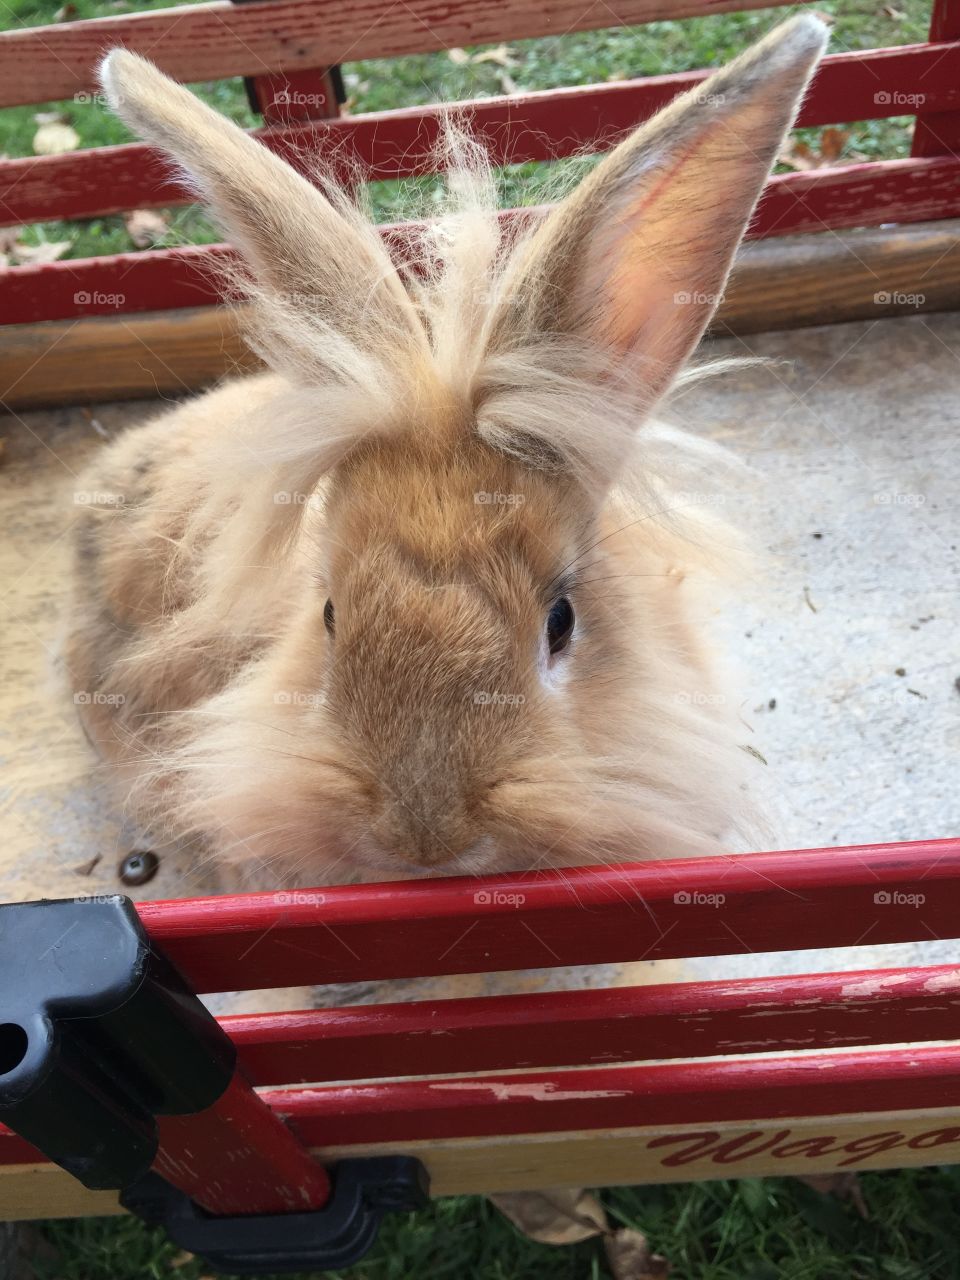 Bunny in a wagon